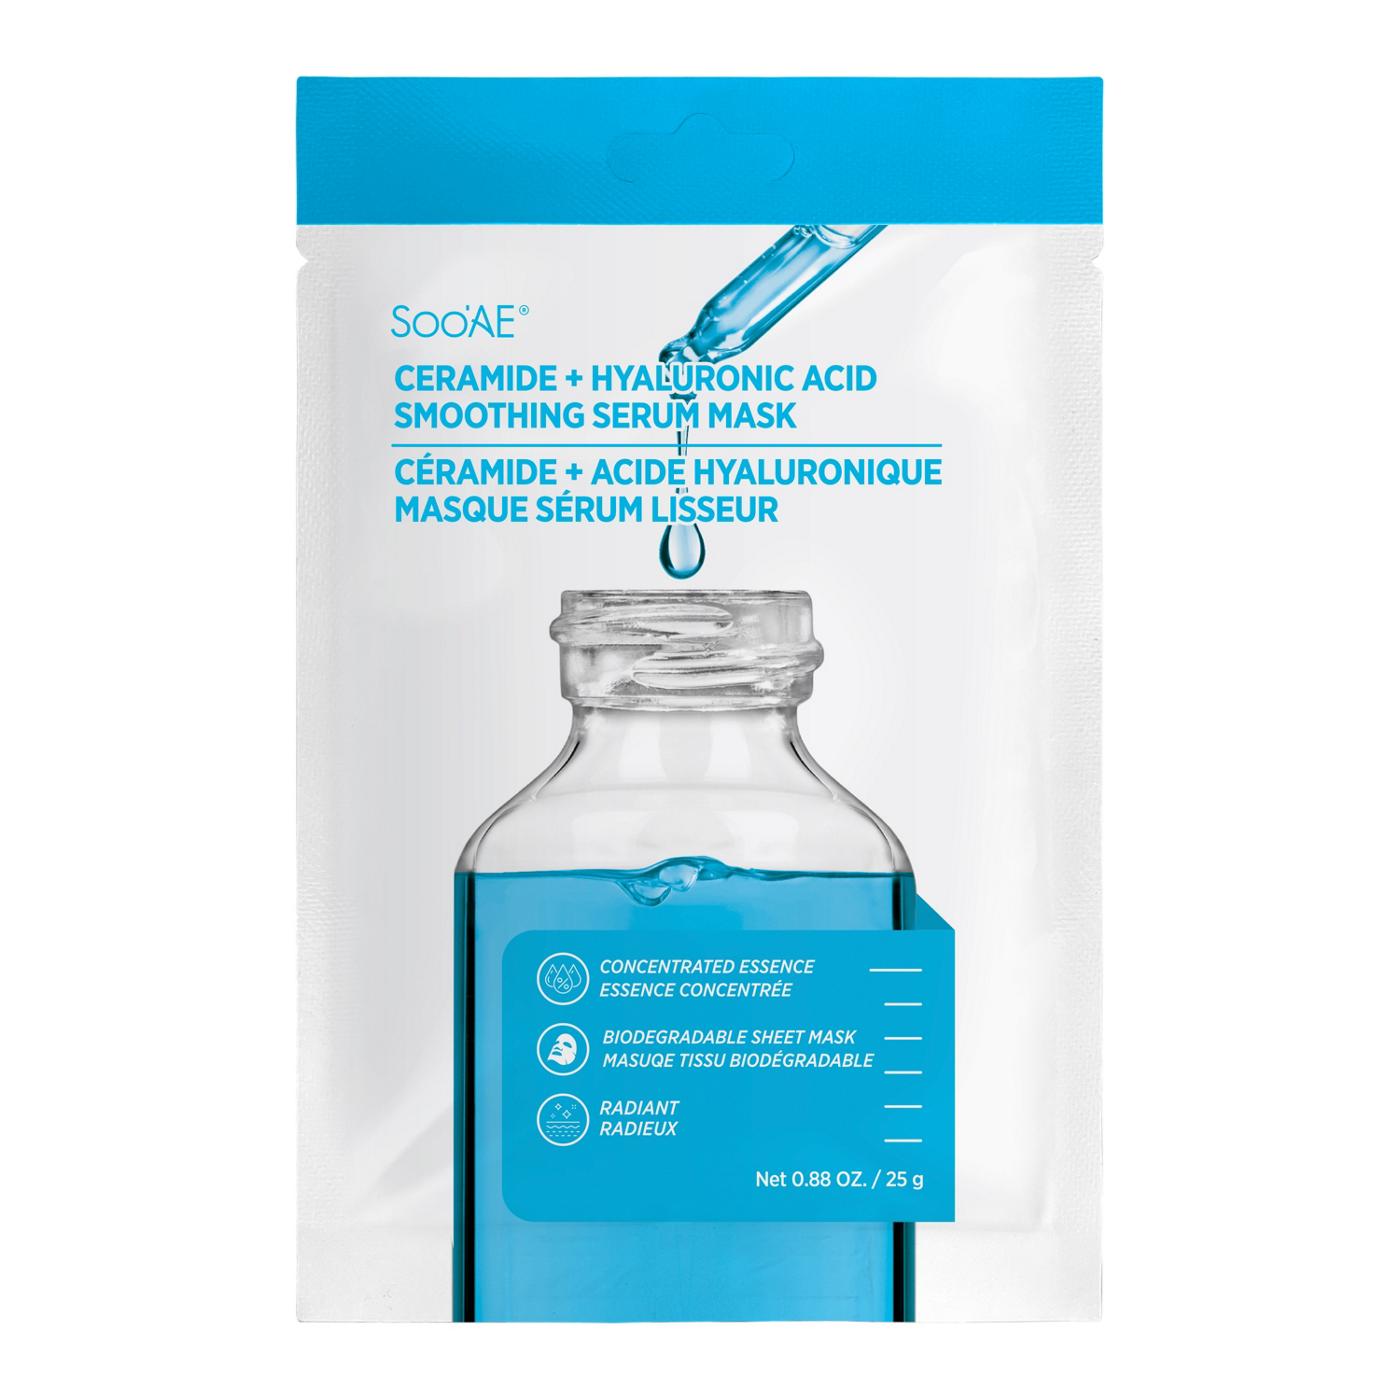 Soo'AE Ceramide + Hyaluronic Acid Smoothing Serum Mask; image 1 of 2